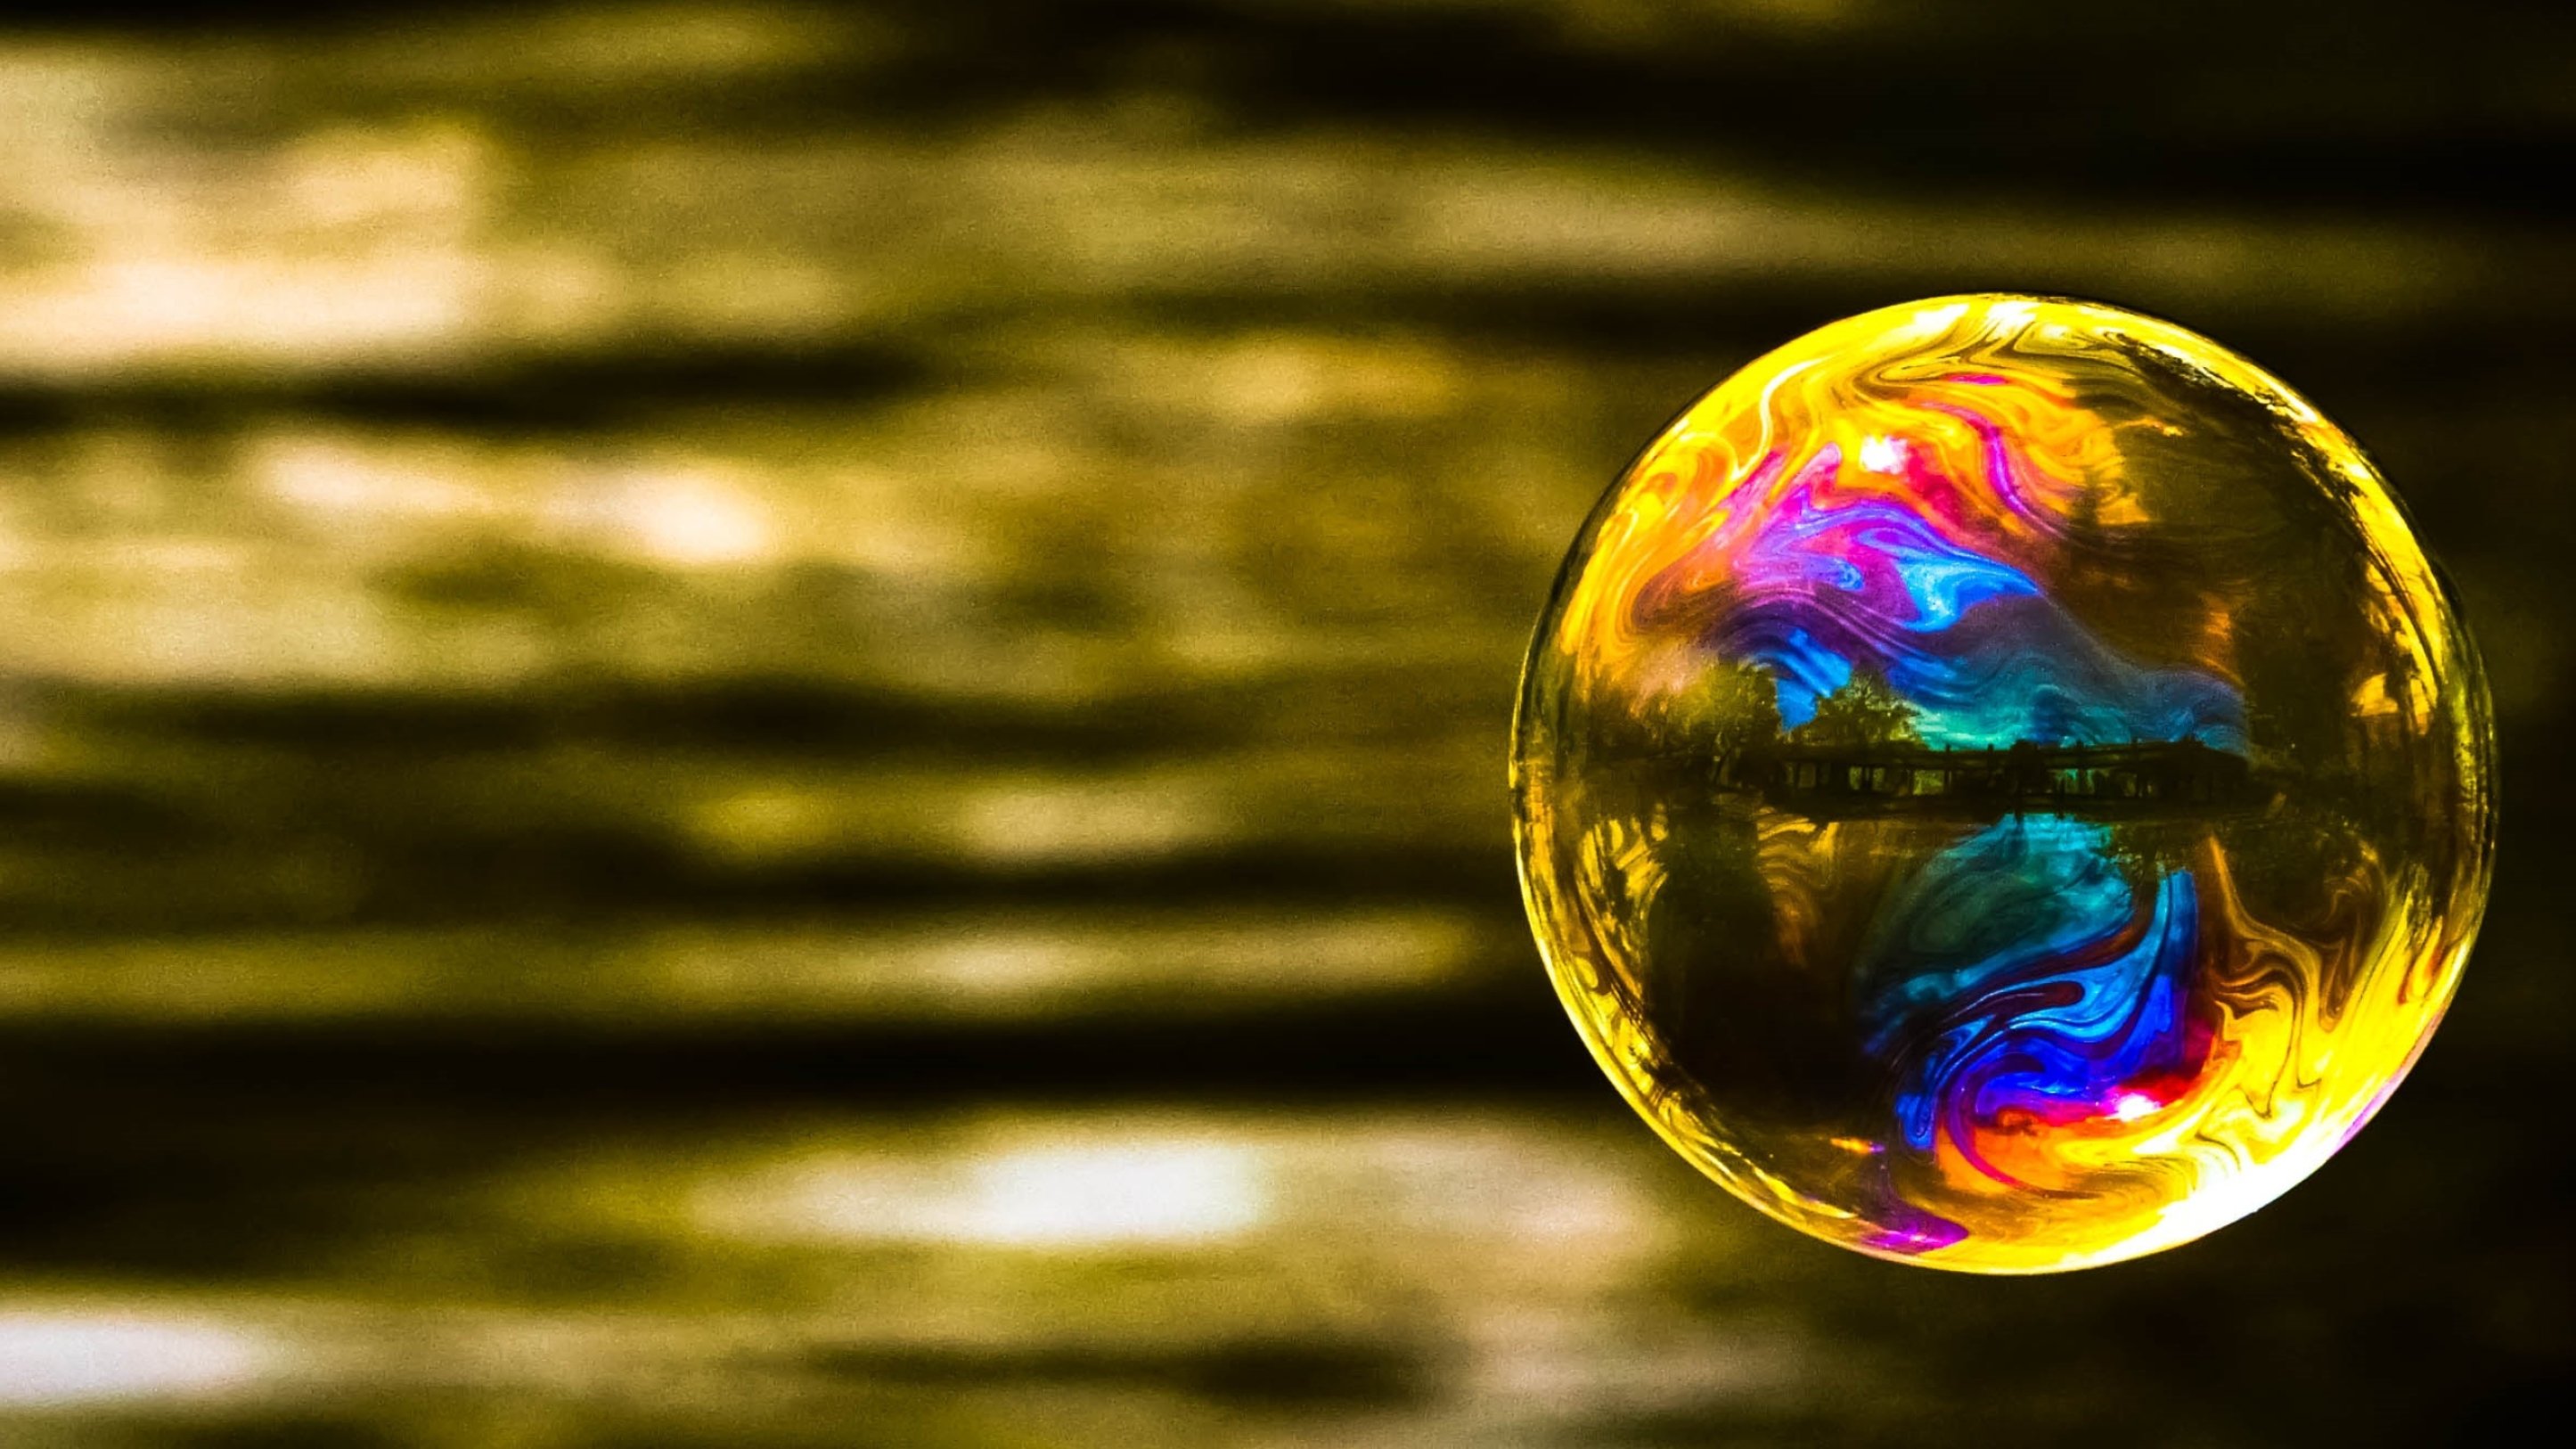 Water reflection, Spherical mirroring, Earth-like orbs, Macro beauty, Liquid ball depiction, 2900x1630 HD Desktop